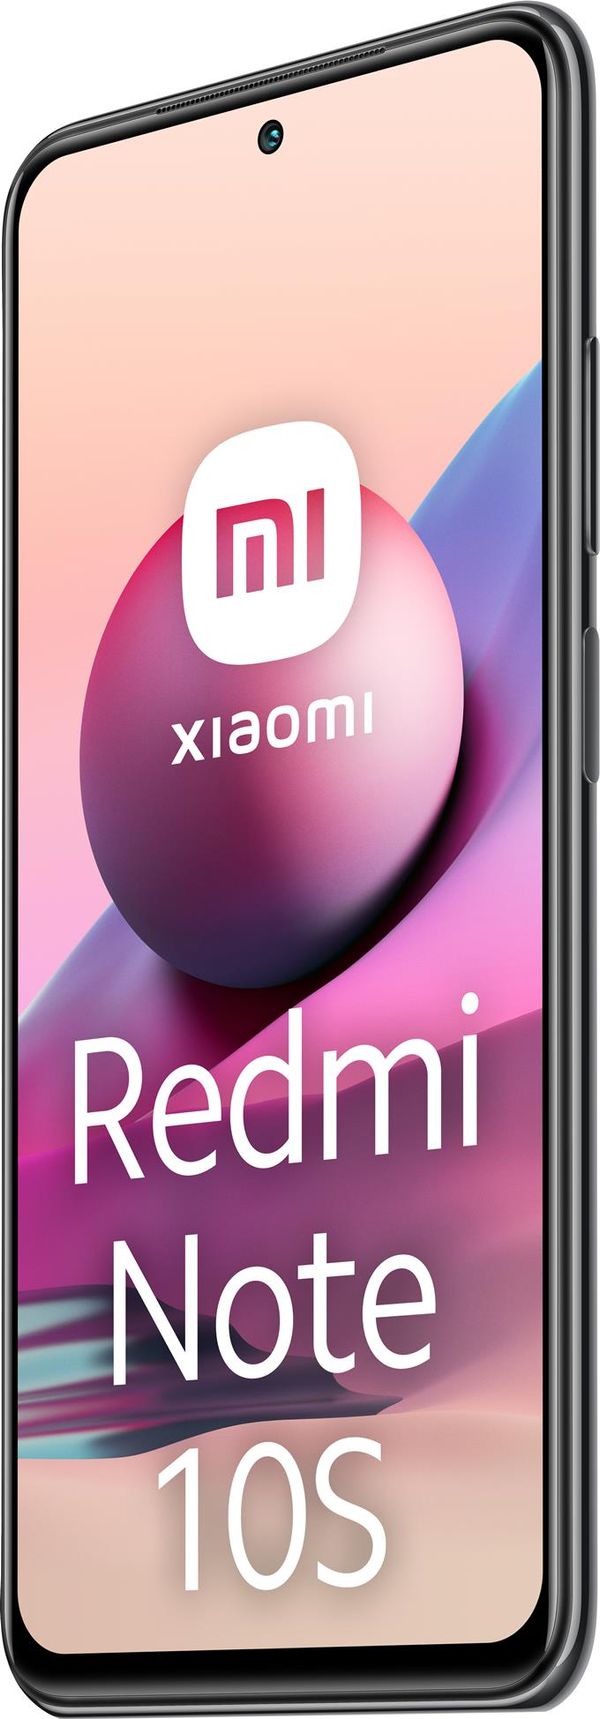 RE-951K7BN90021-PQ smartphone reacondicionado xiaomi redmi note 10s onyx gray 6gb ram 64gb rom grado a